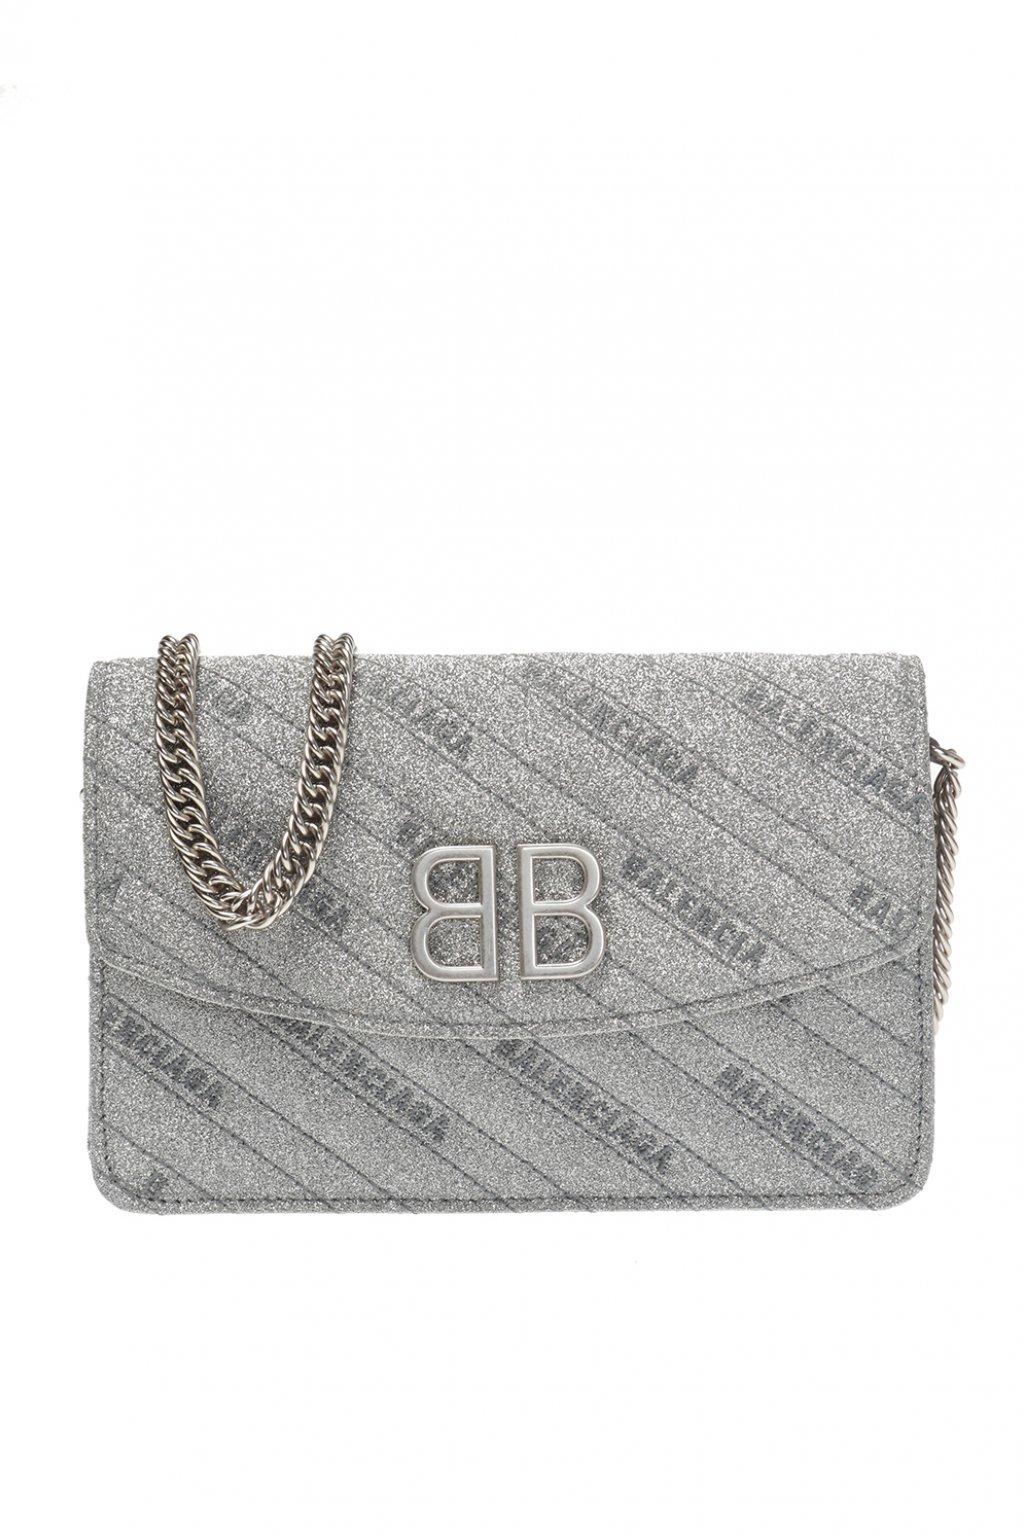 Balenciaga Bb Glittered Leather Shoulder Bag in Silver (Metallic) | Lyst